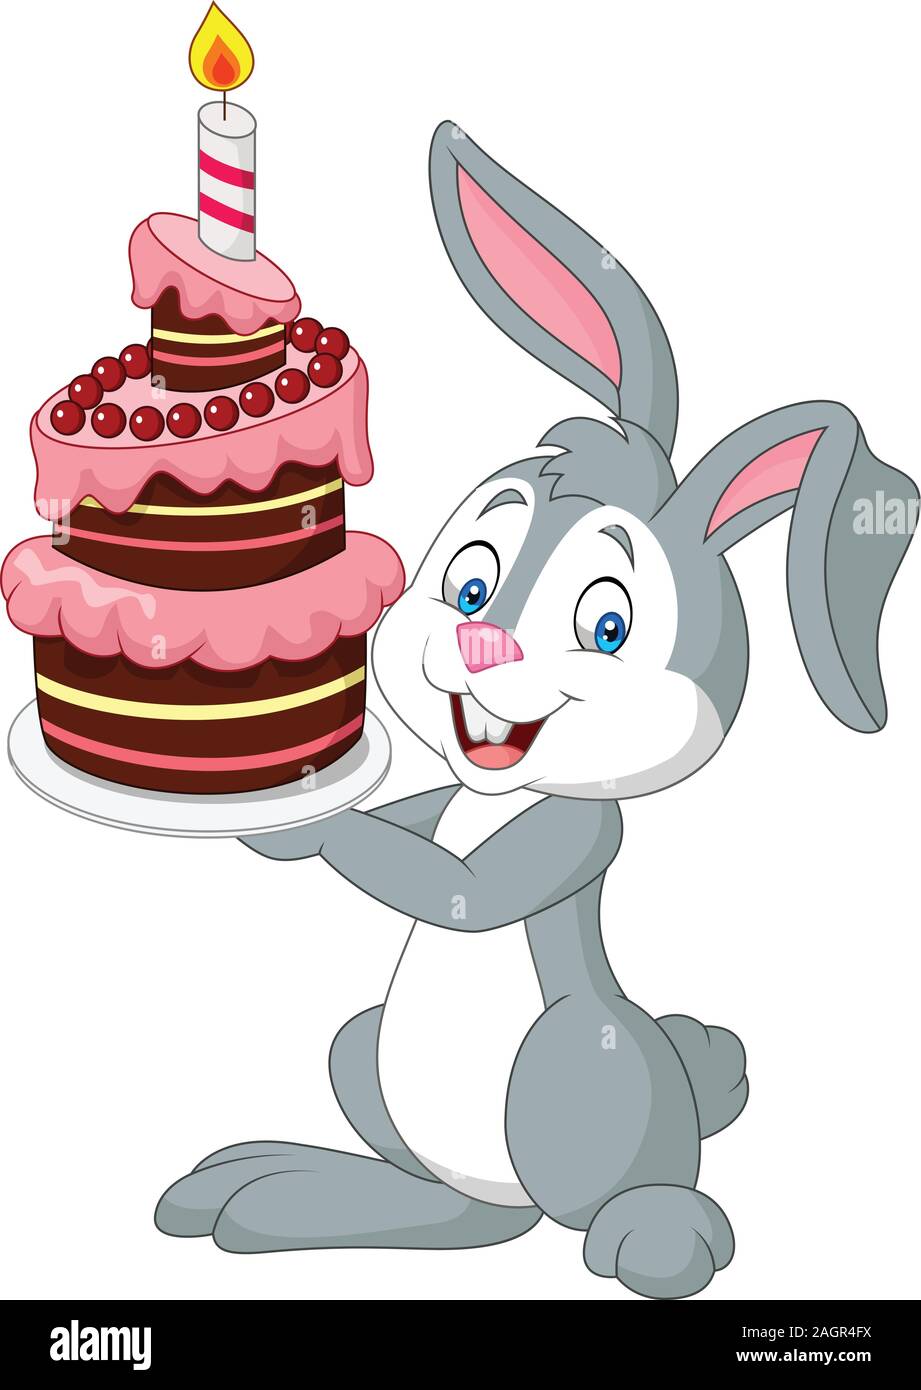 Lapin cartoon holding birthday cake Image Vectorielle Stock - Alamy